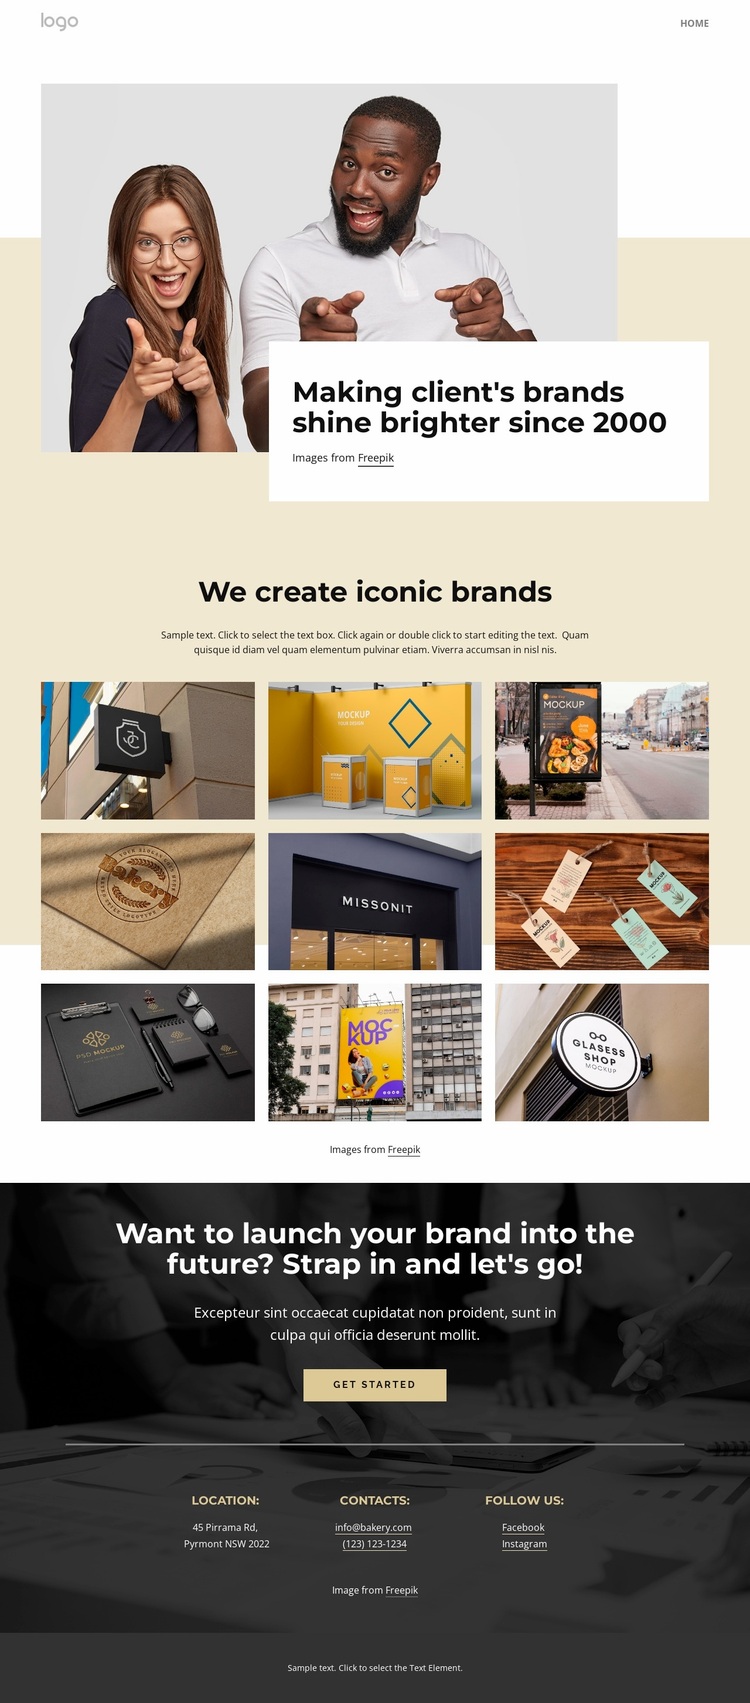 We create iconic brands Website Design